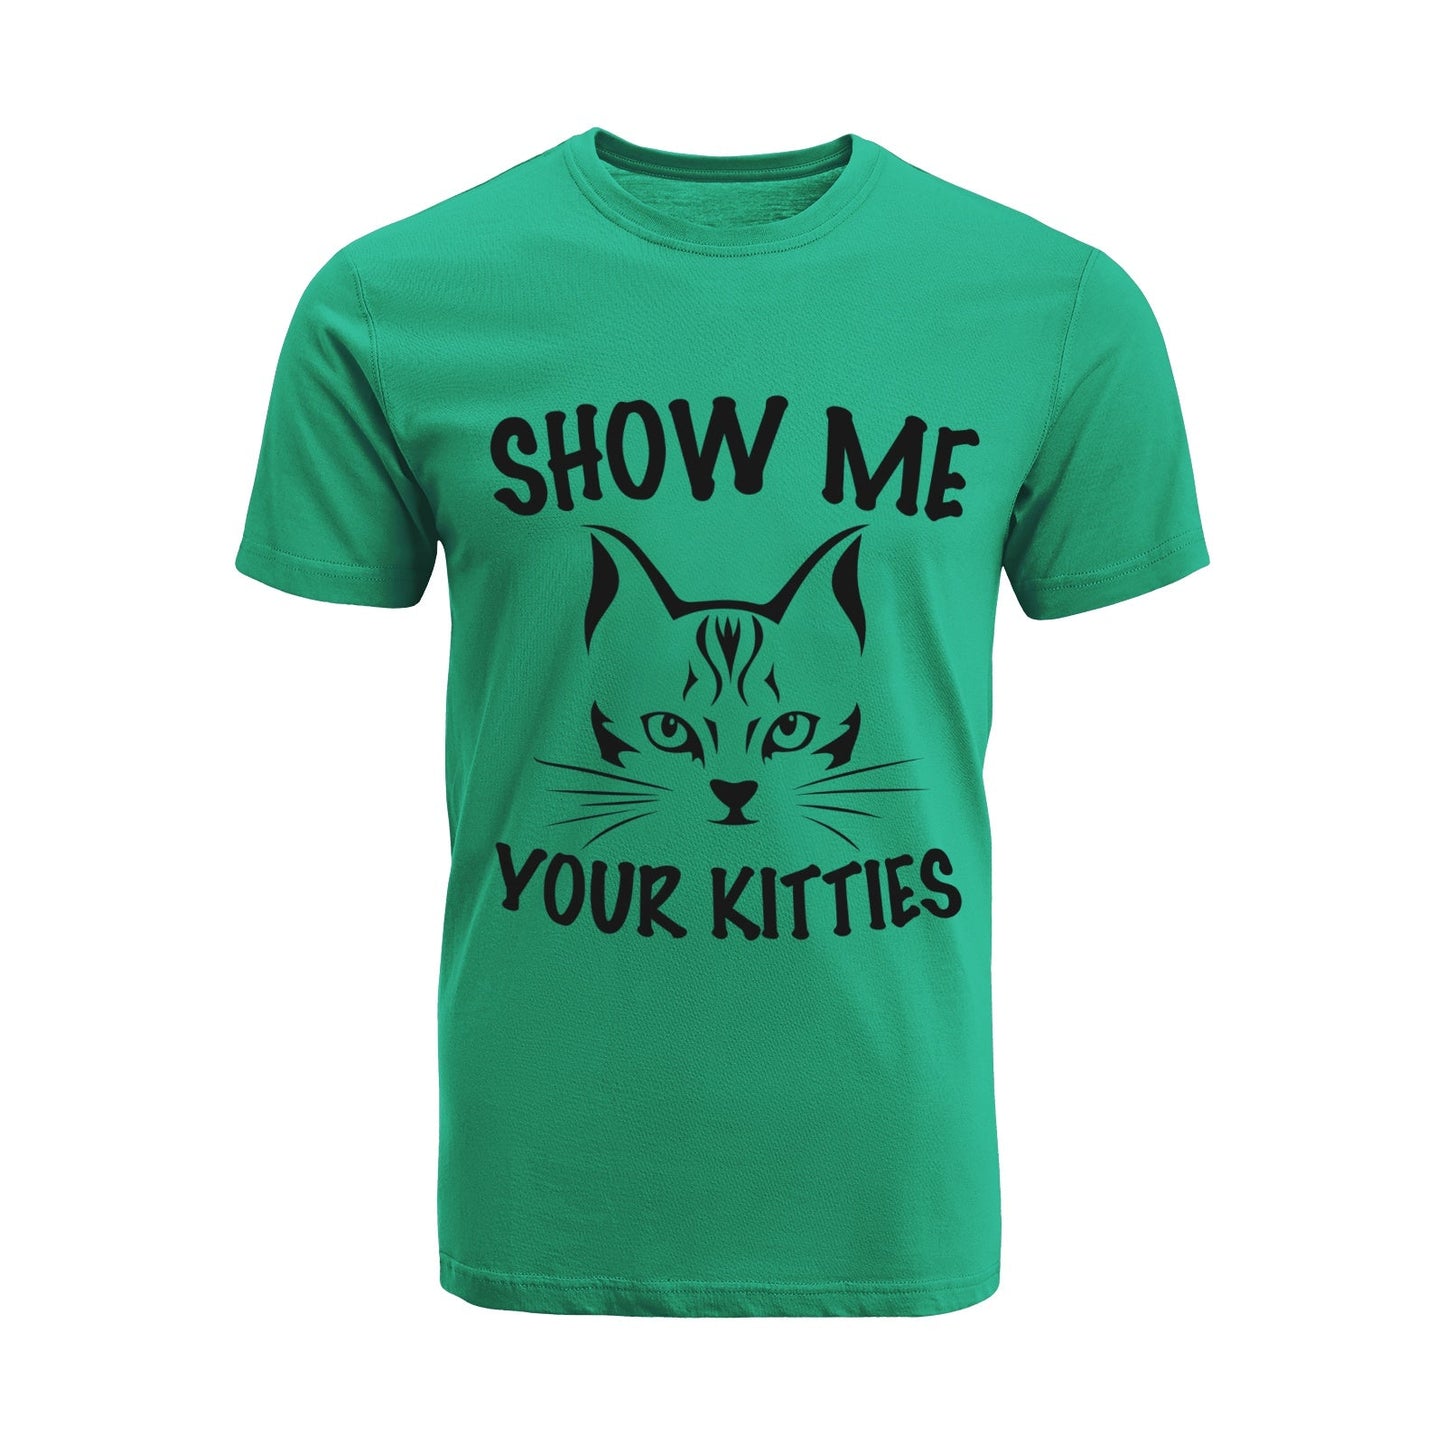 Unisex Short Sleeve Crew Neck Cotton Jersey T-Shirt CAT 17 - Tara-Outfits.com